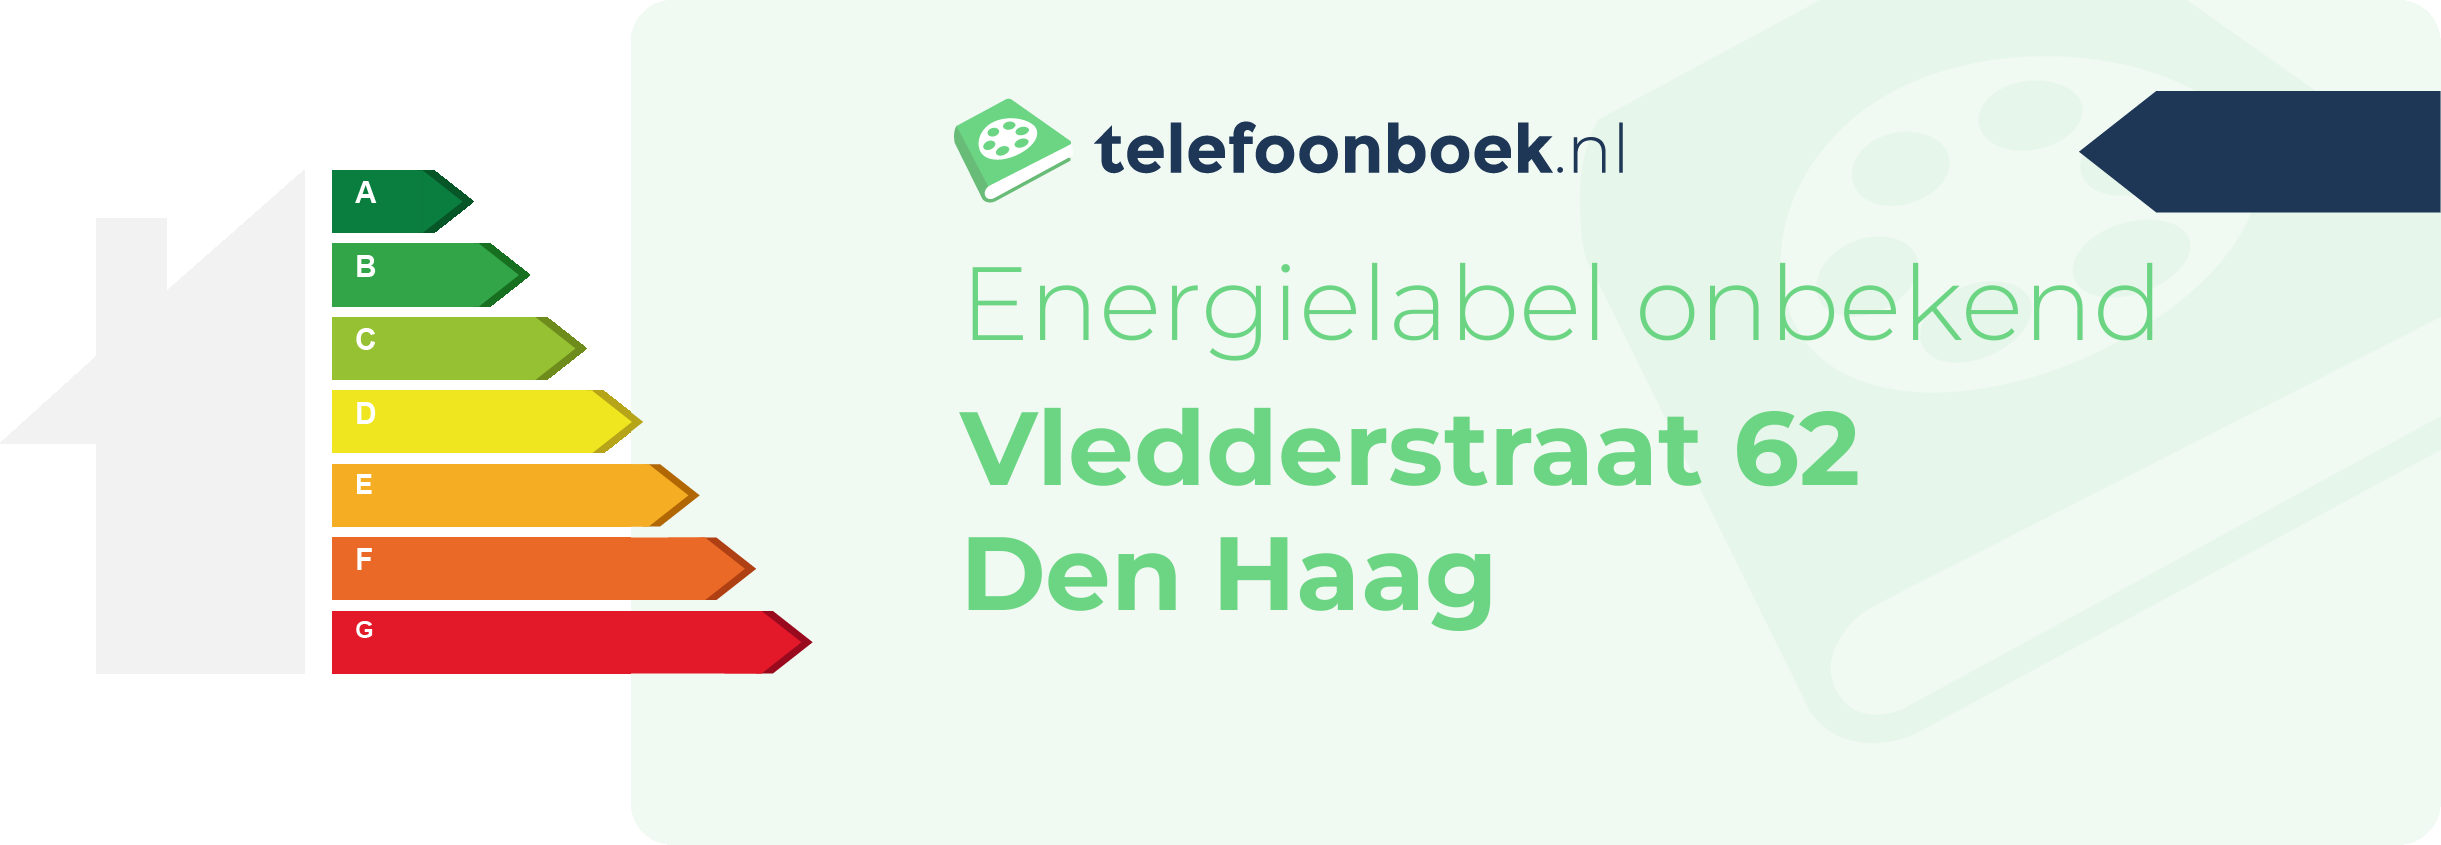 Energielabel Vledderstraat 62 Den Haag